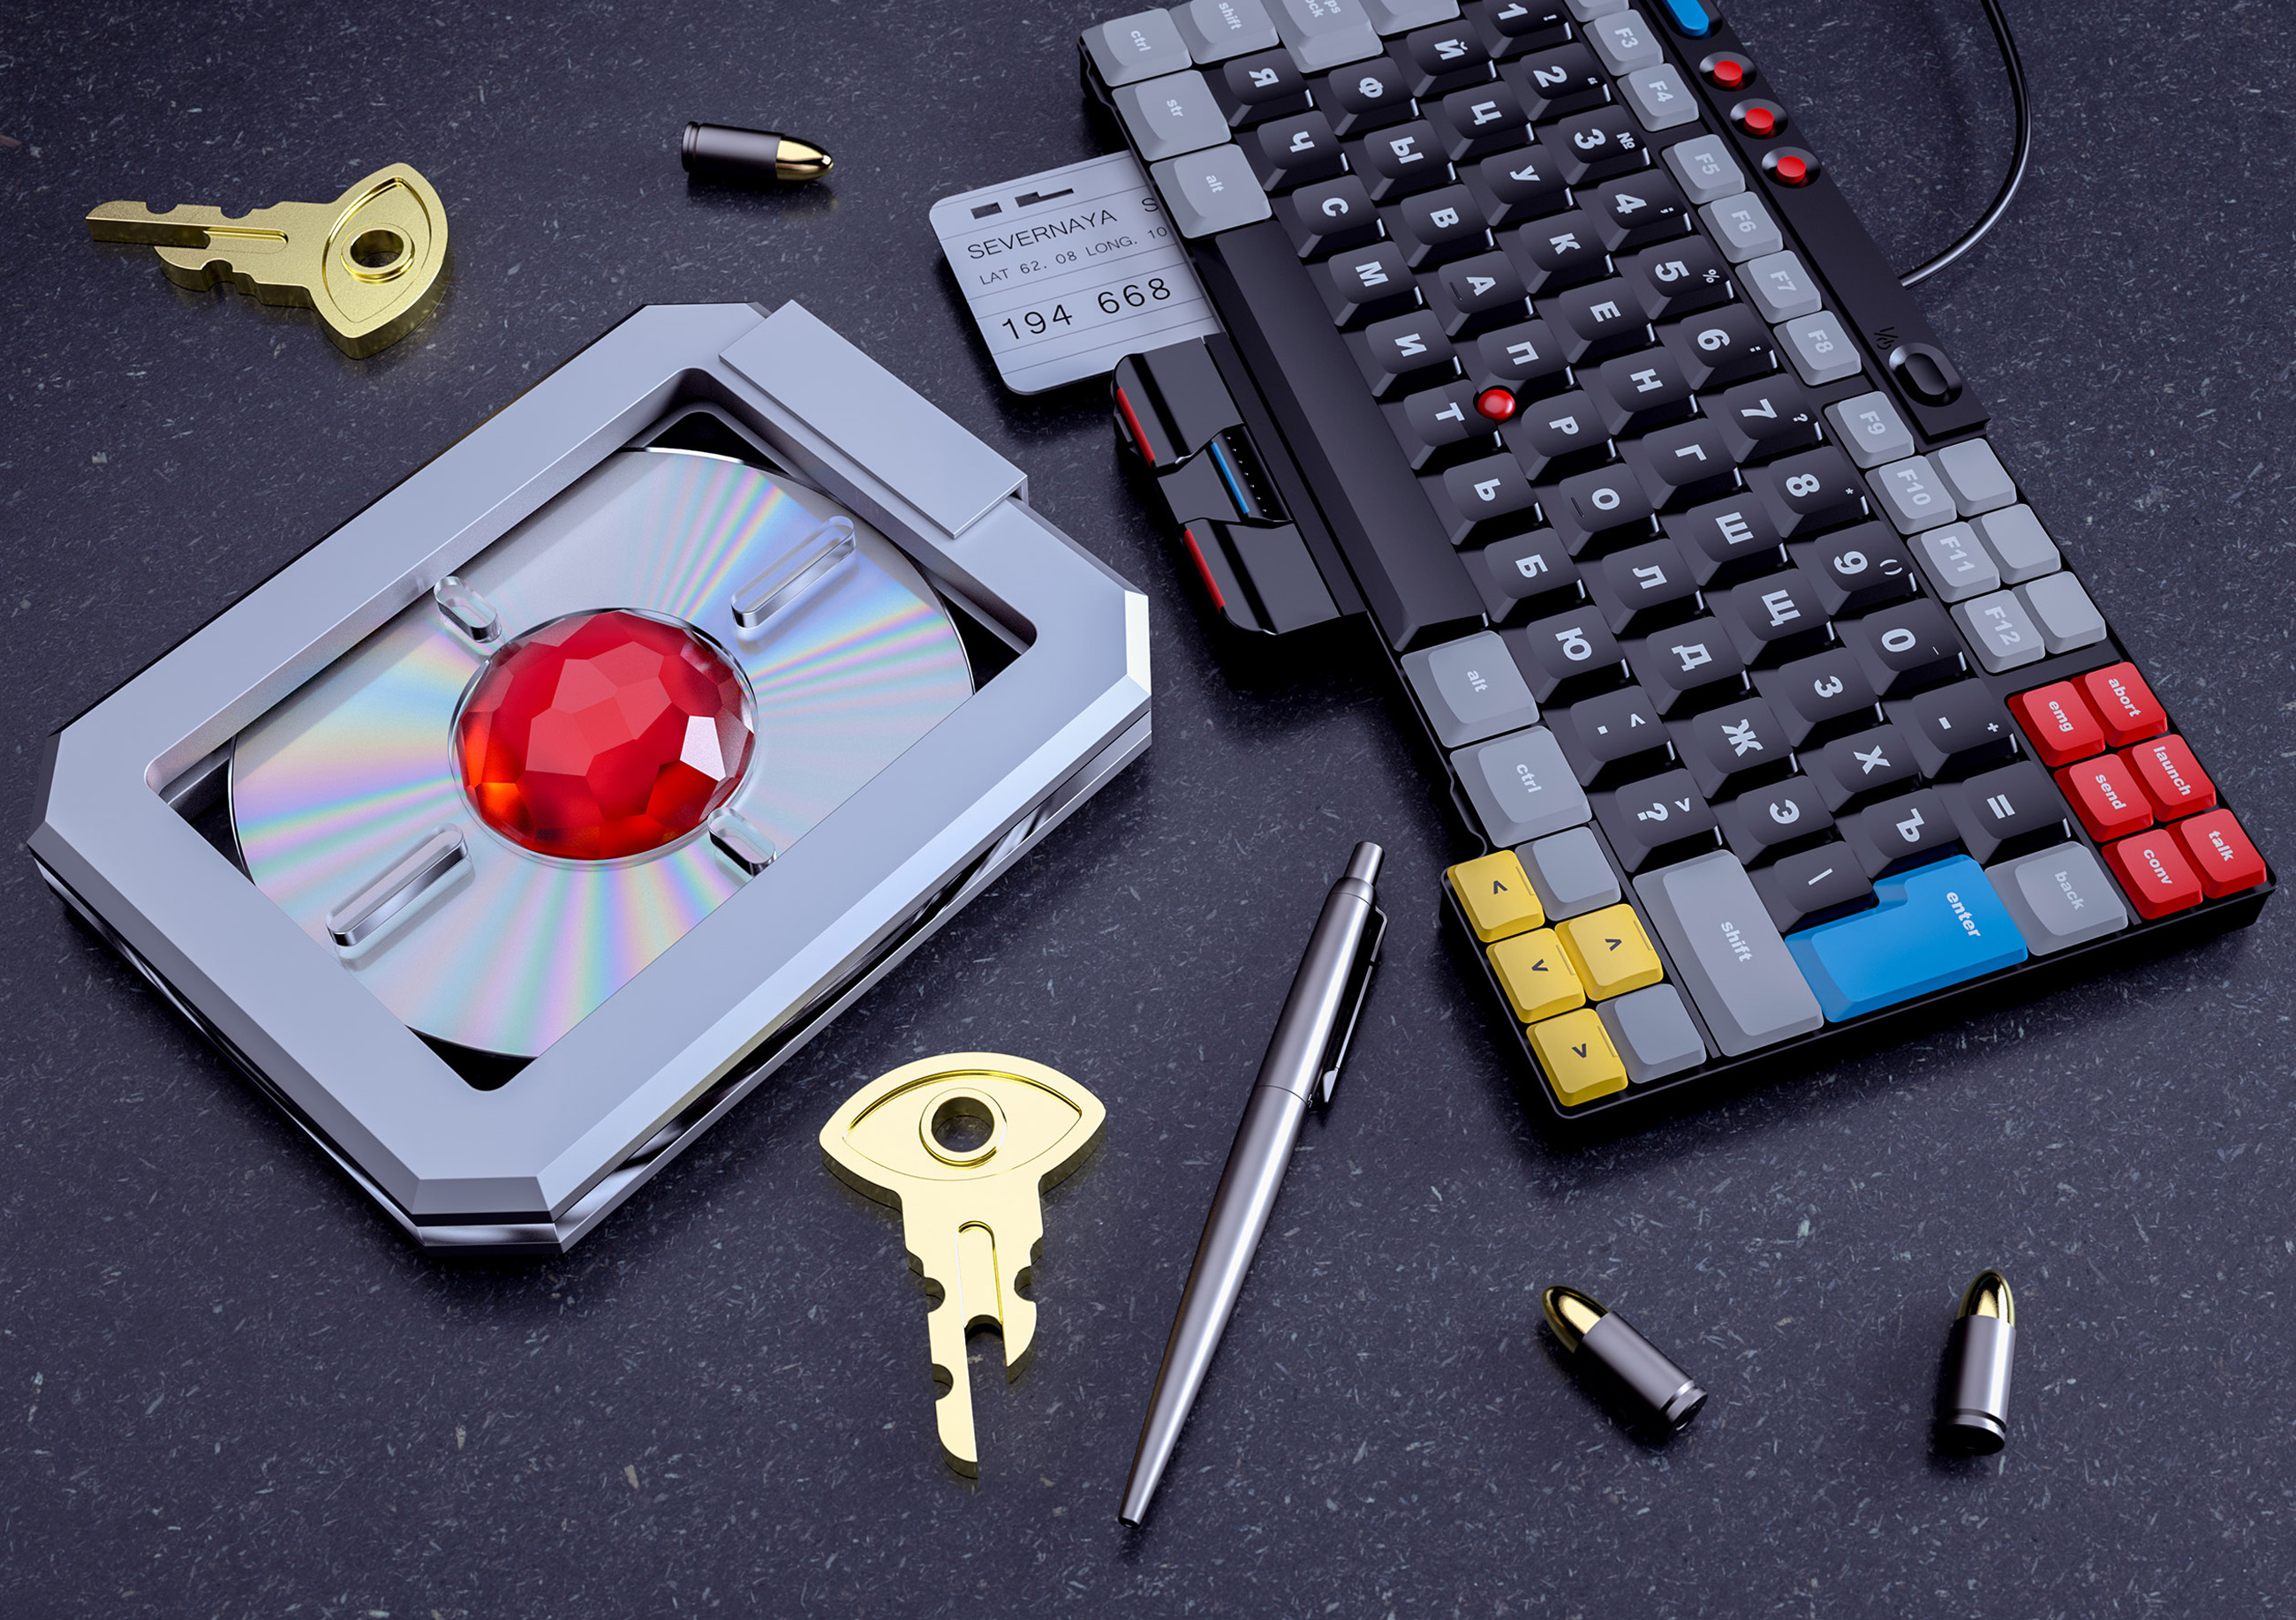 007 disc and keys found in Goldeneye.